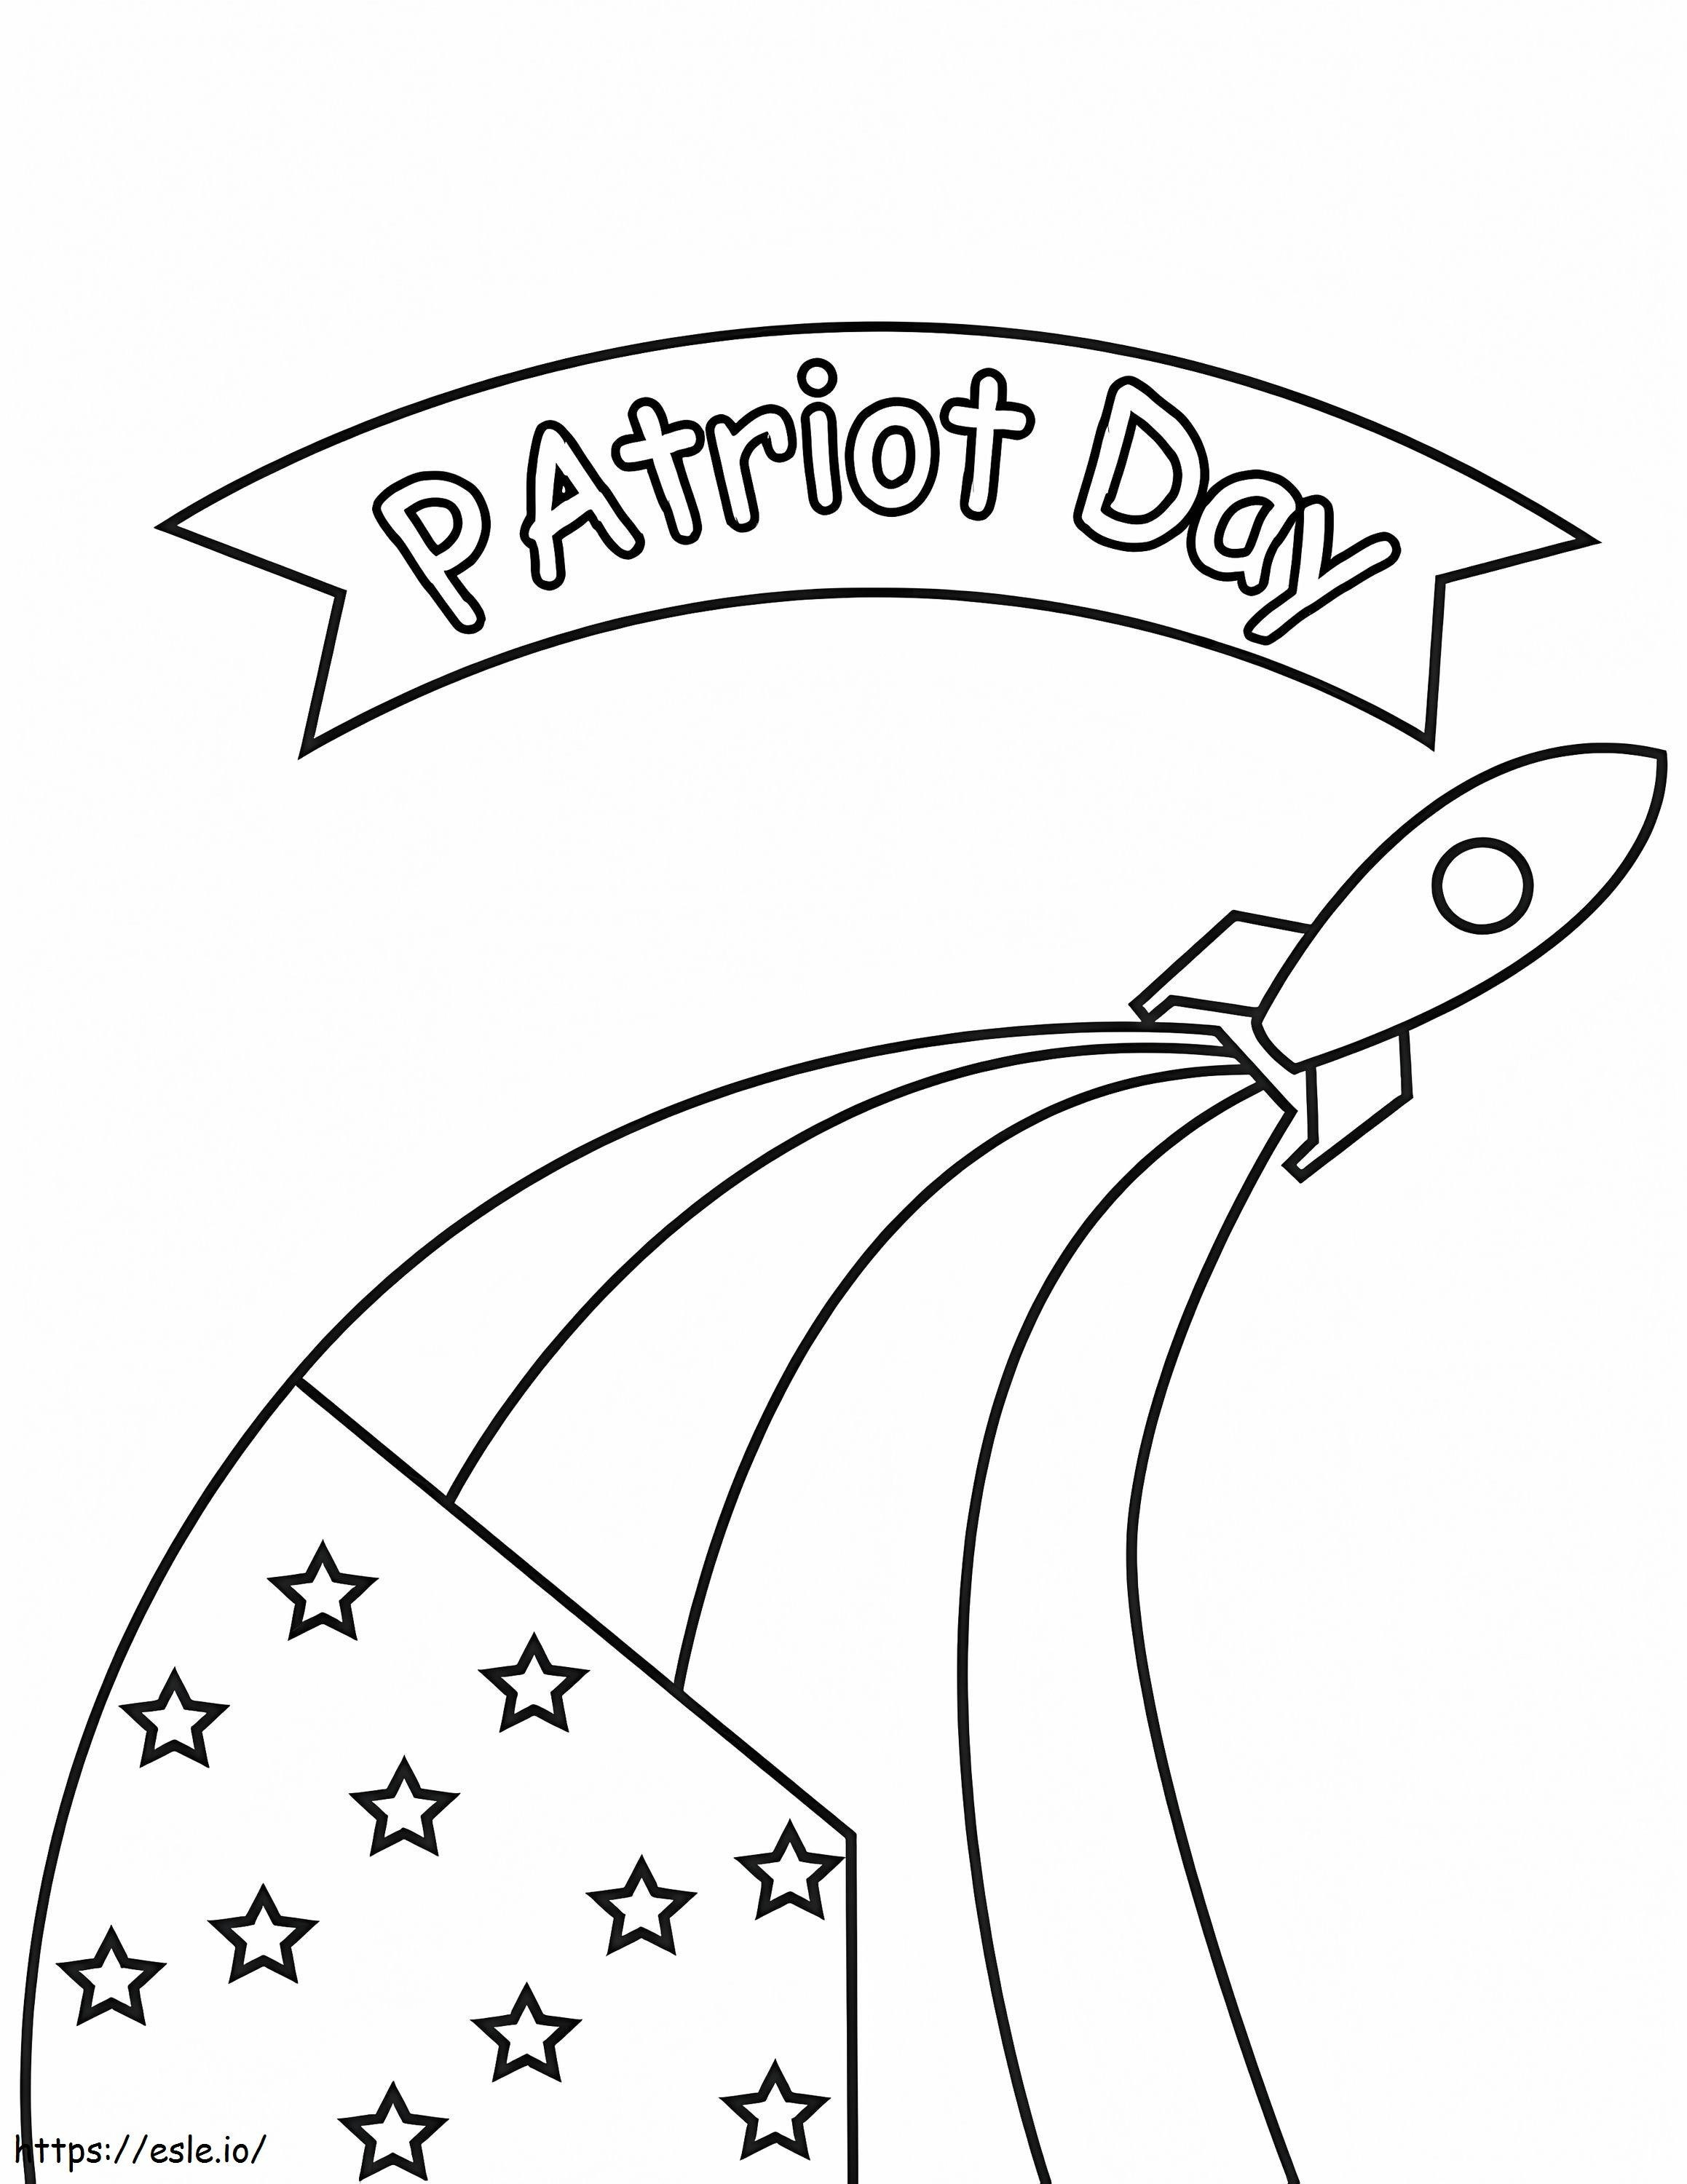 Patriot dag kleurplaat kleurplaat